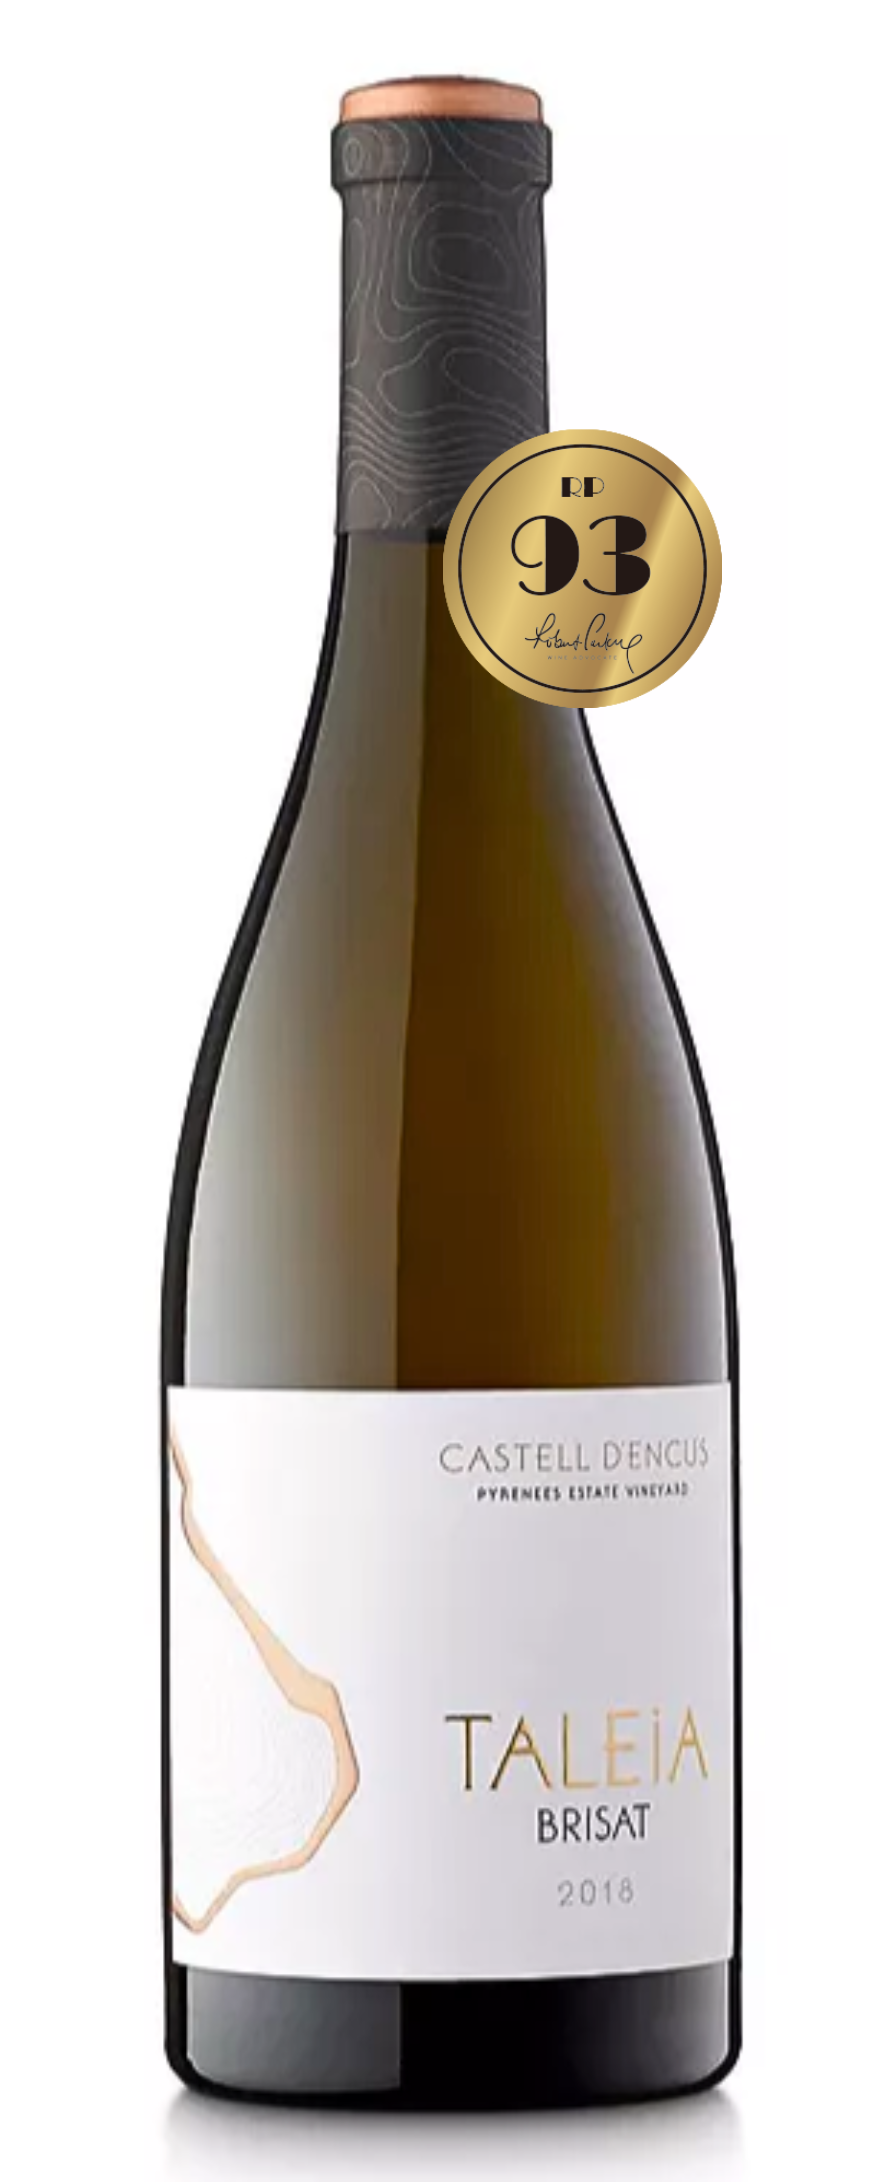 Castell d'Encus Taleia Brisat 2018 (RP: 93) (Skin Contact Orange Wine)